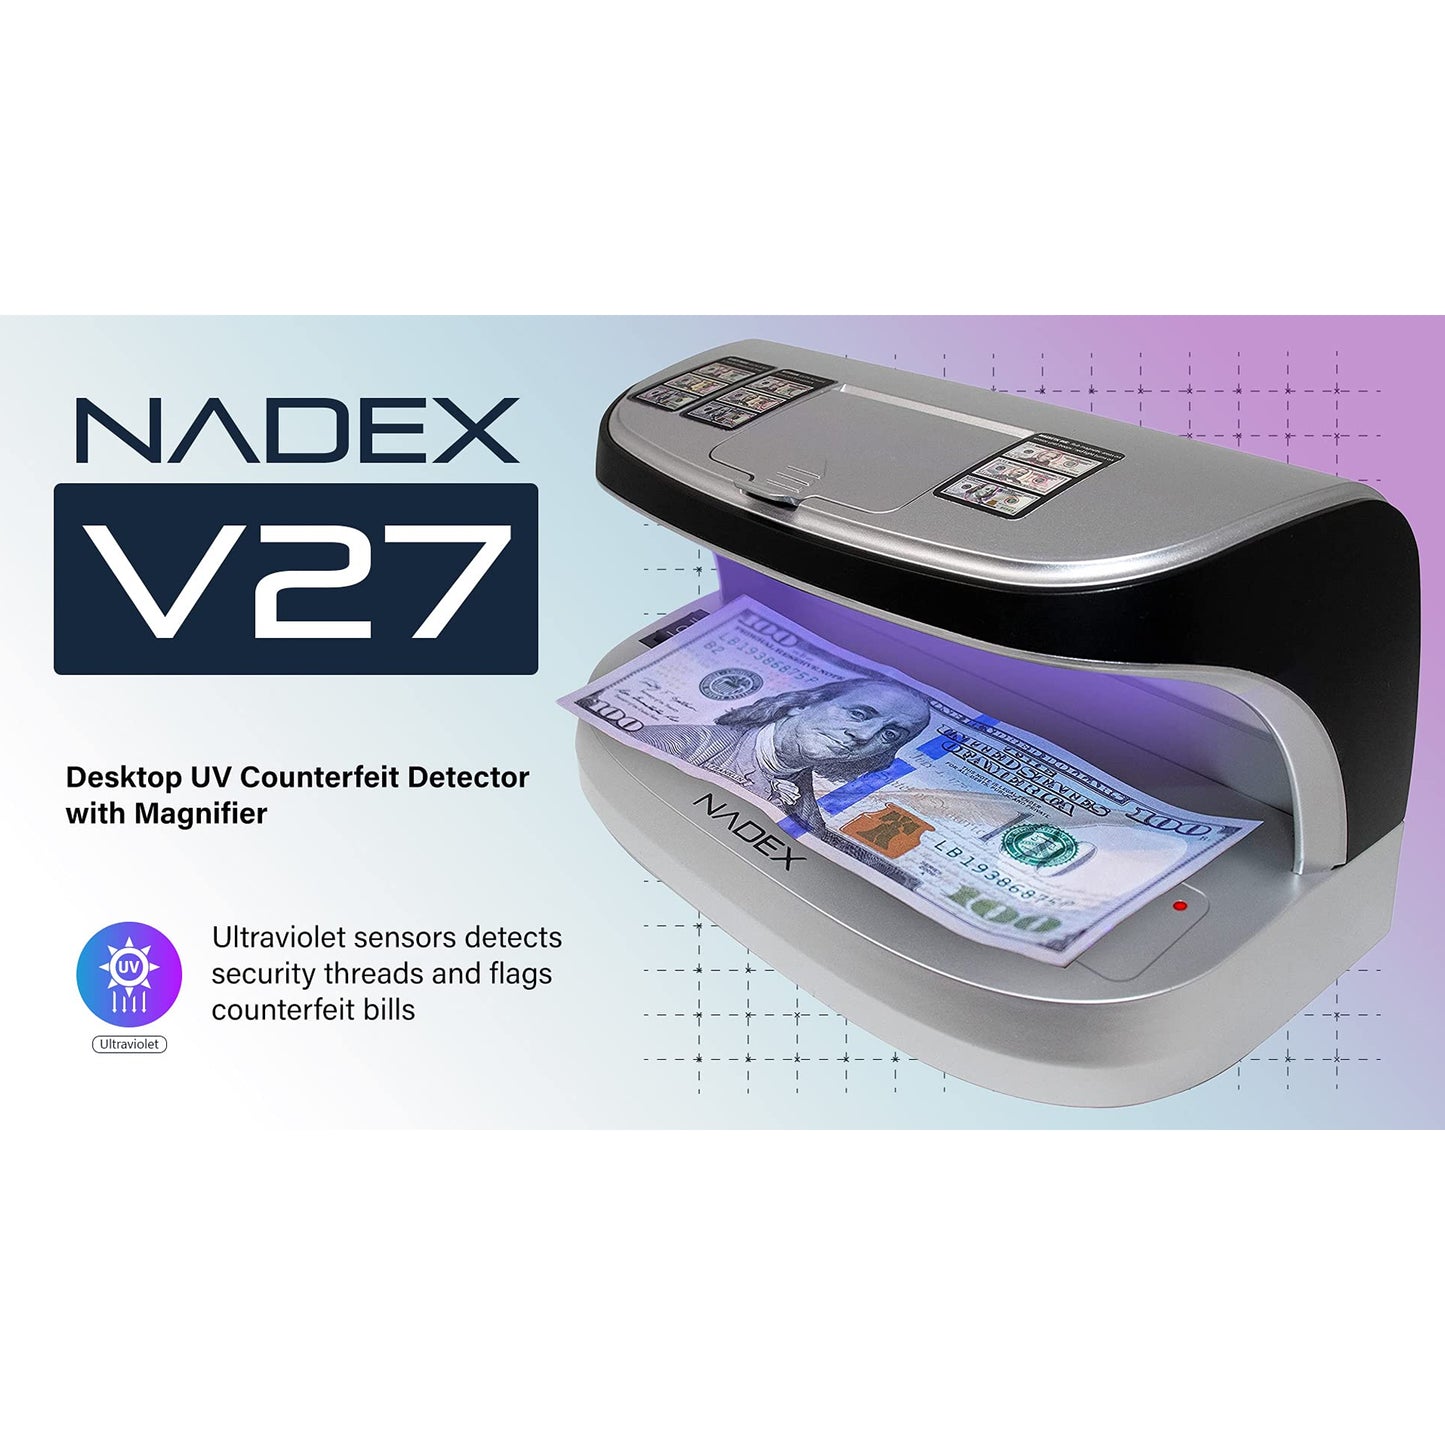 V27 Desktop UV Counterfeit Detector